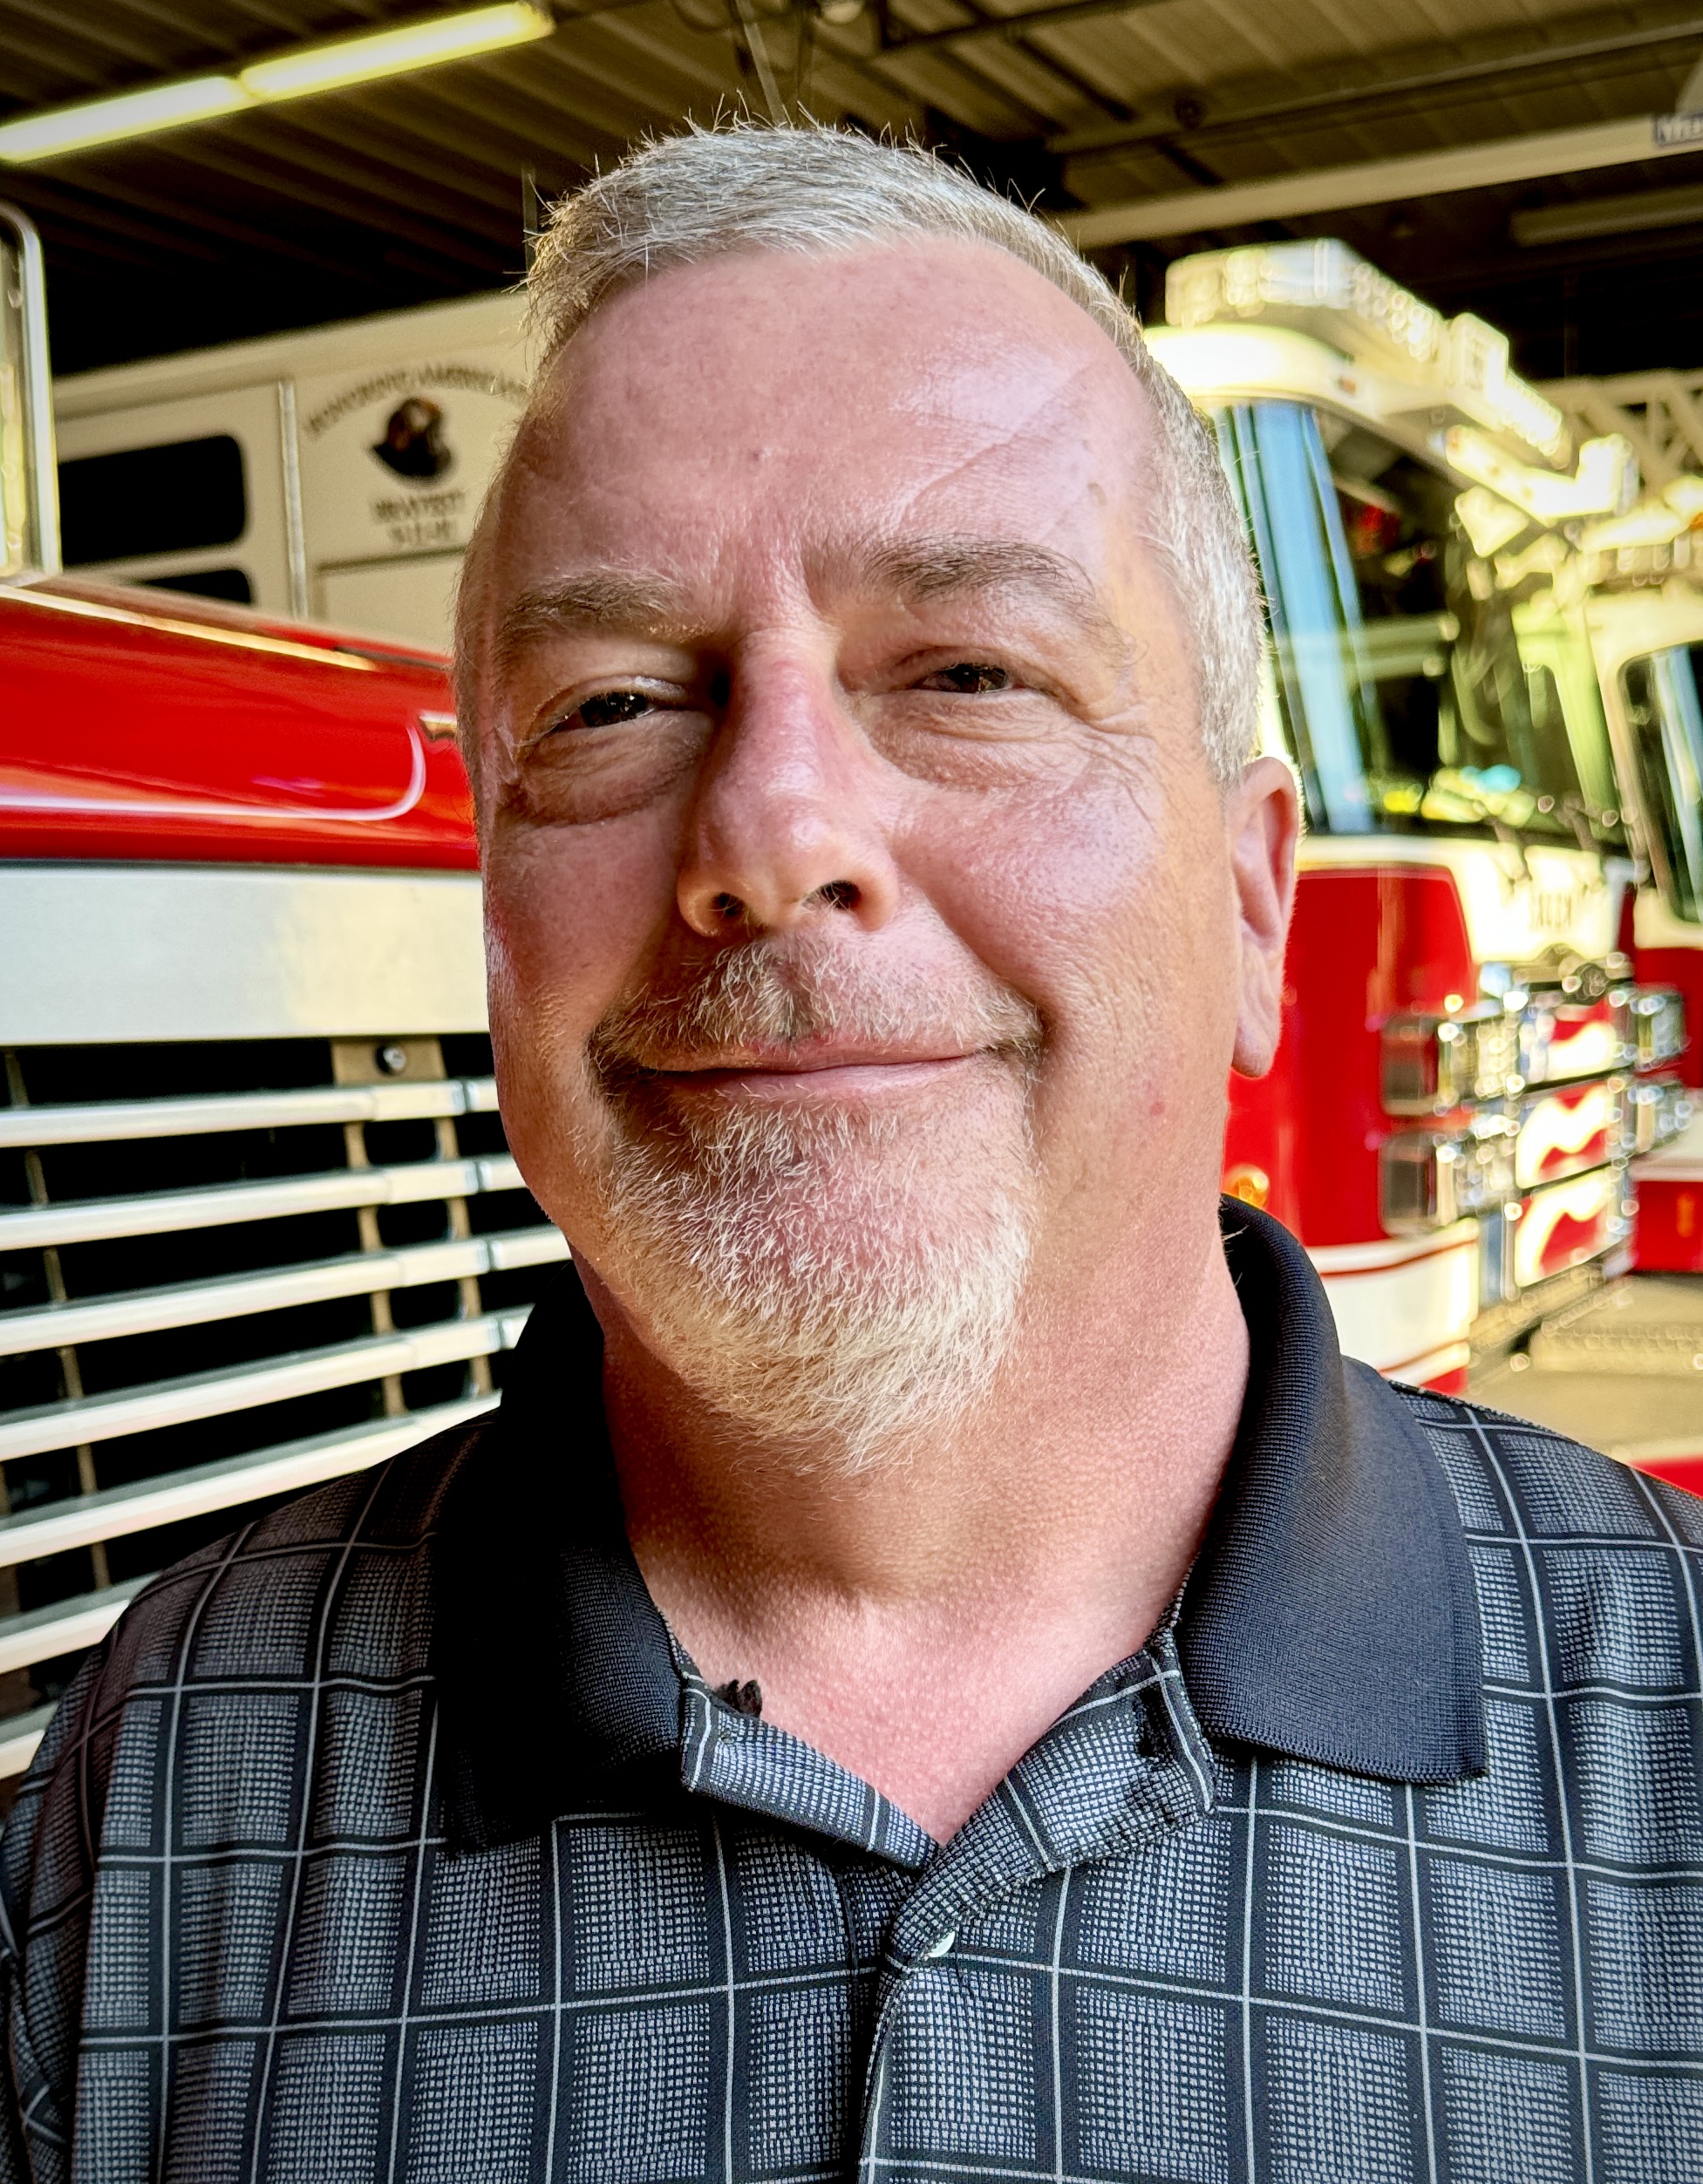 Salem Volunteer Fire Company Member Fred Revoir